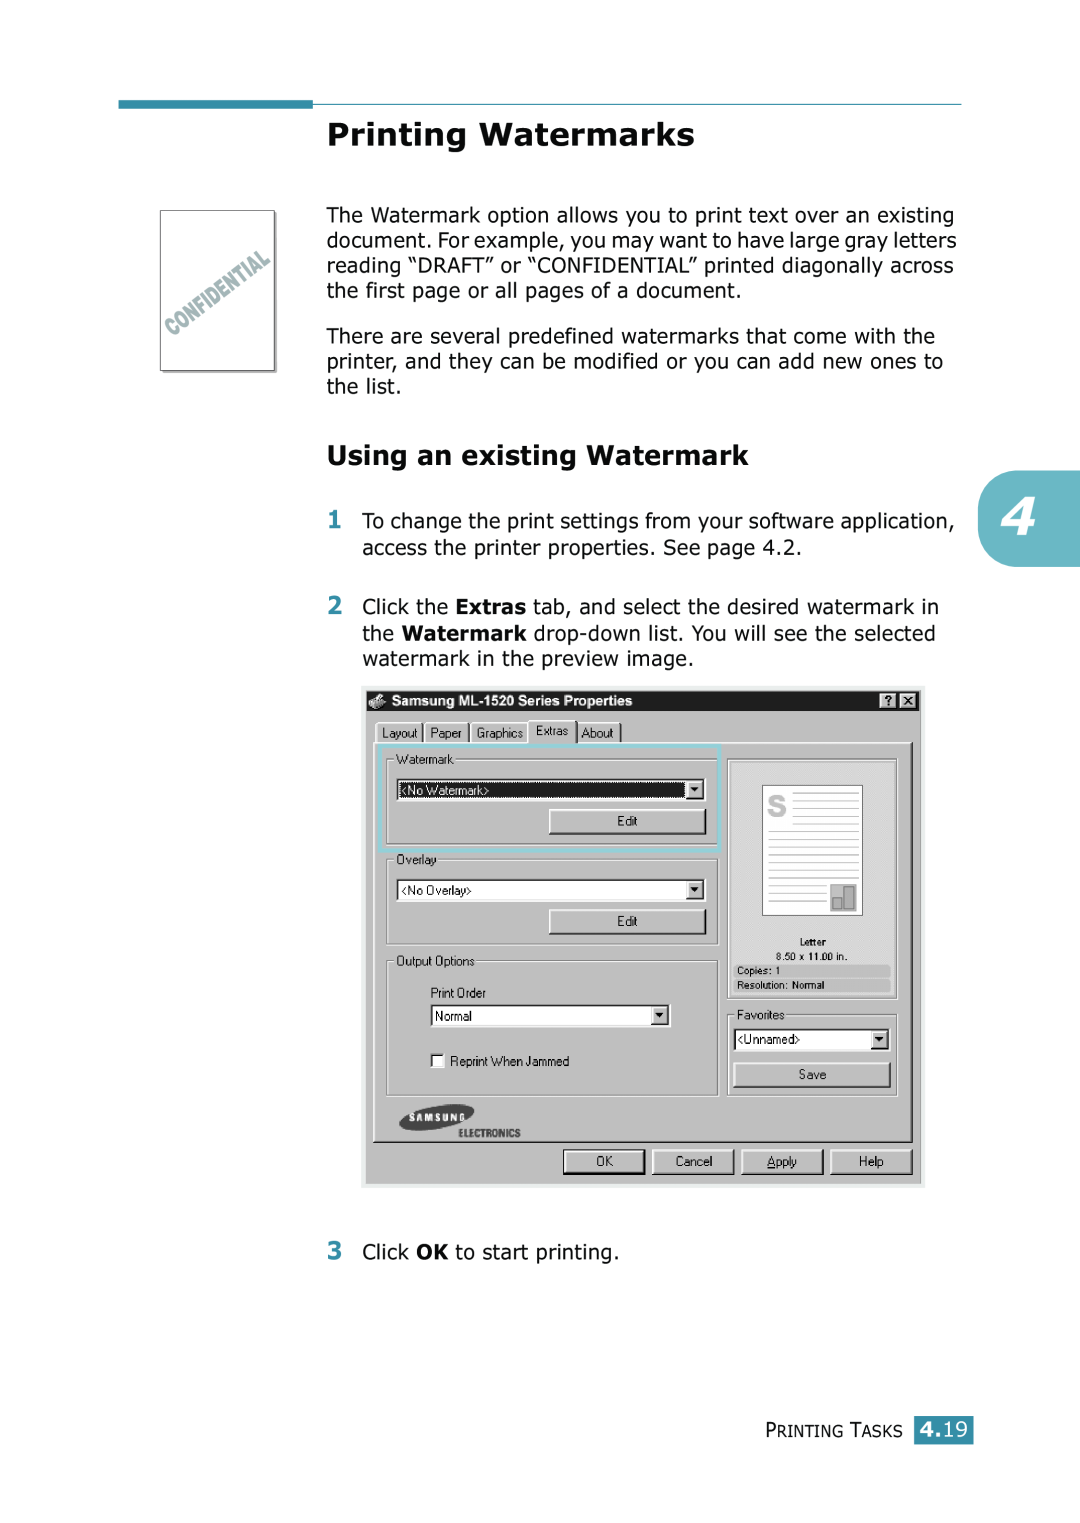 Samsung ML-1520 manual Printing Watermarks, Using an existing Watermark 